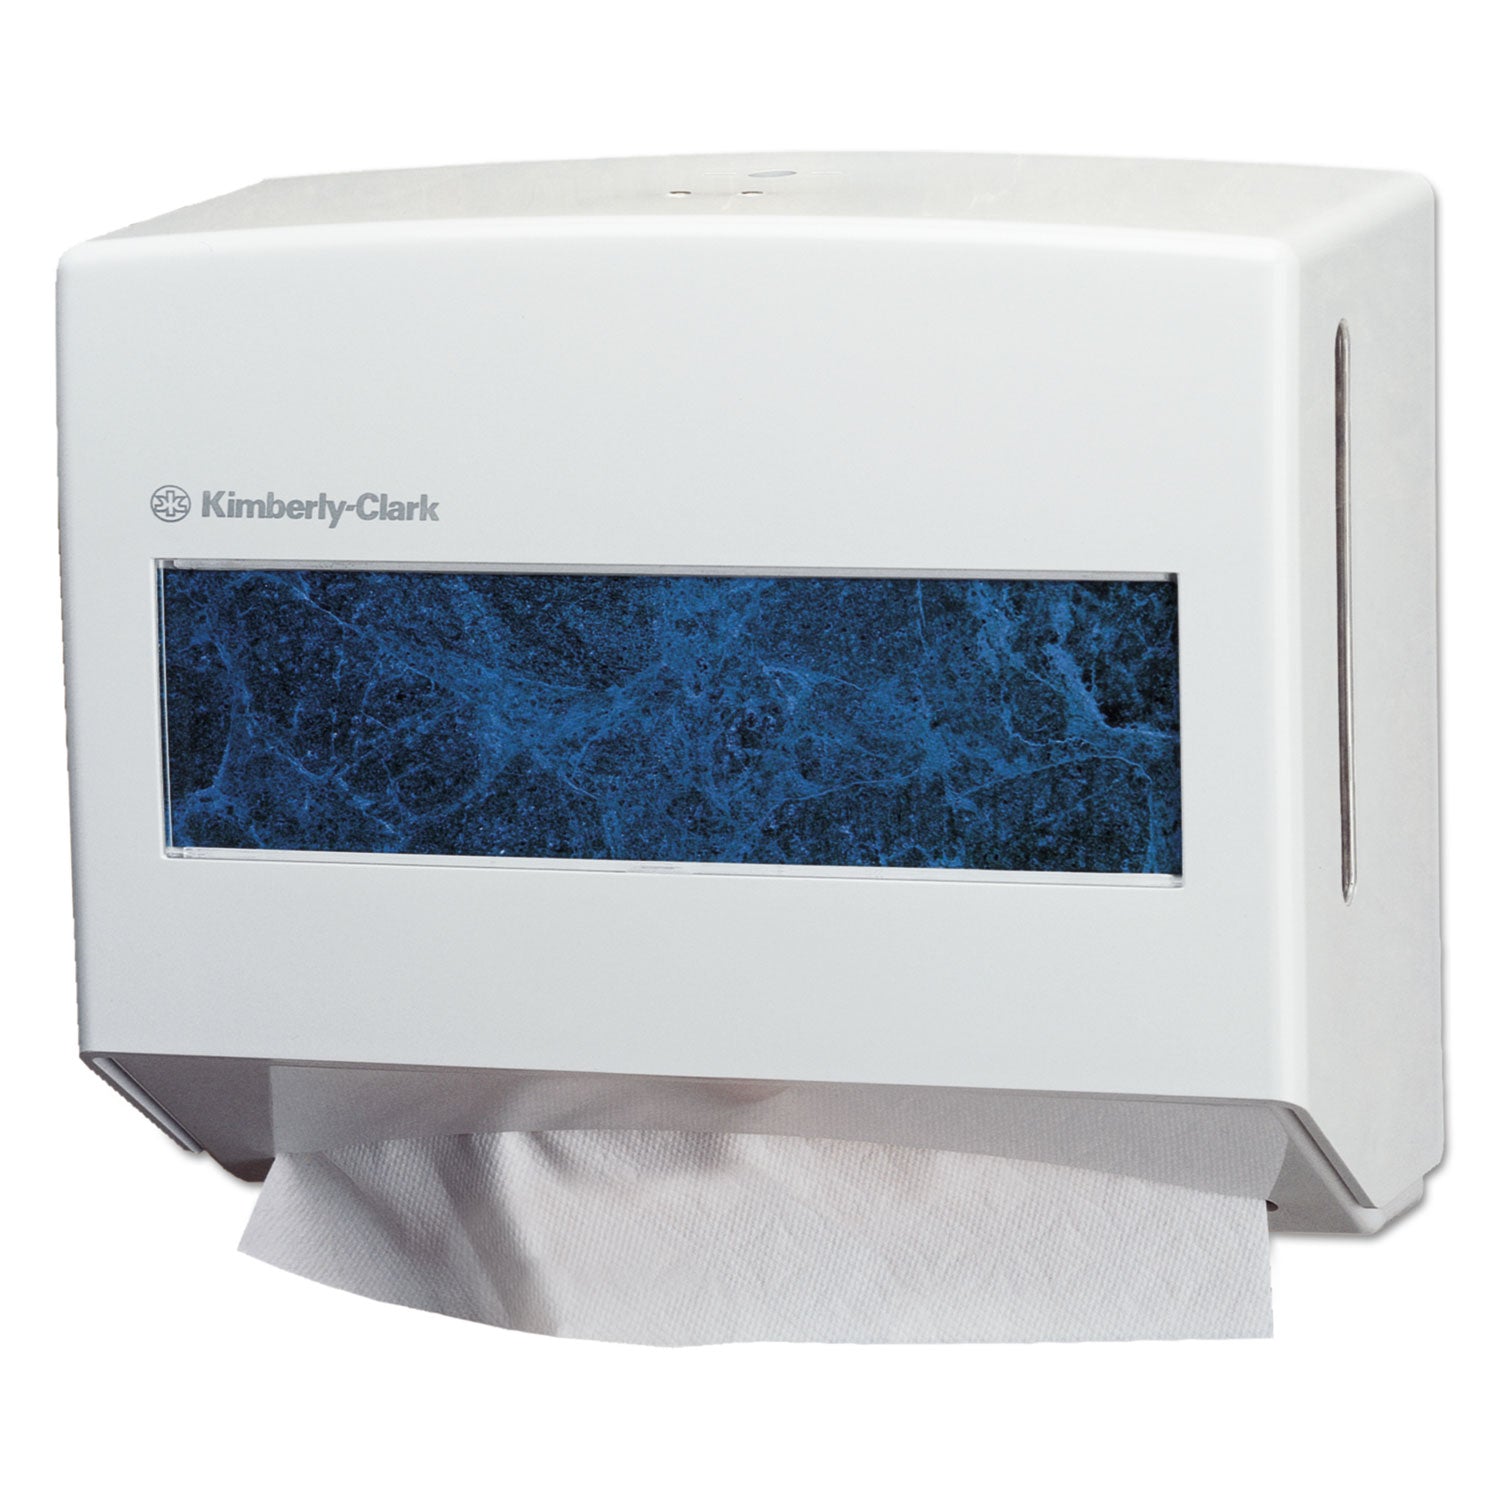 scottfold-compact-towel-dispenser-1075-x-475-x-9-pearl-white_kcc09217 - 1